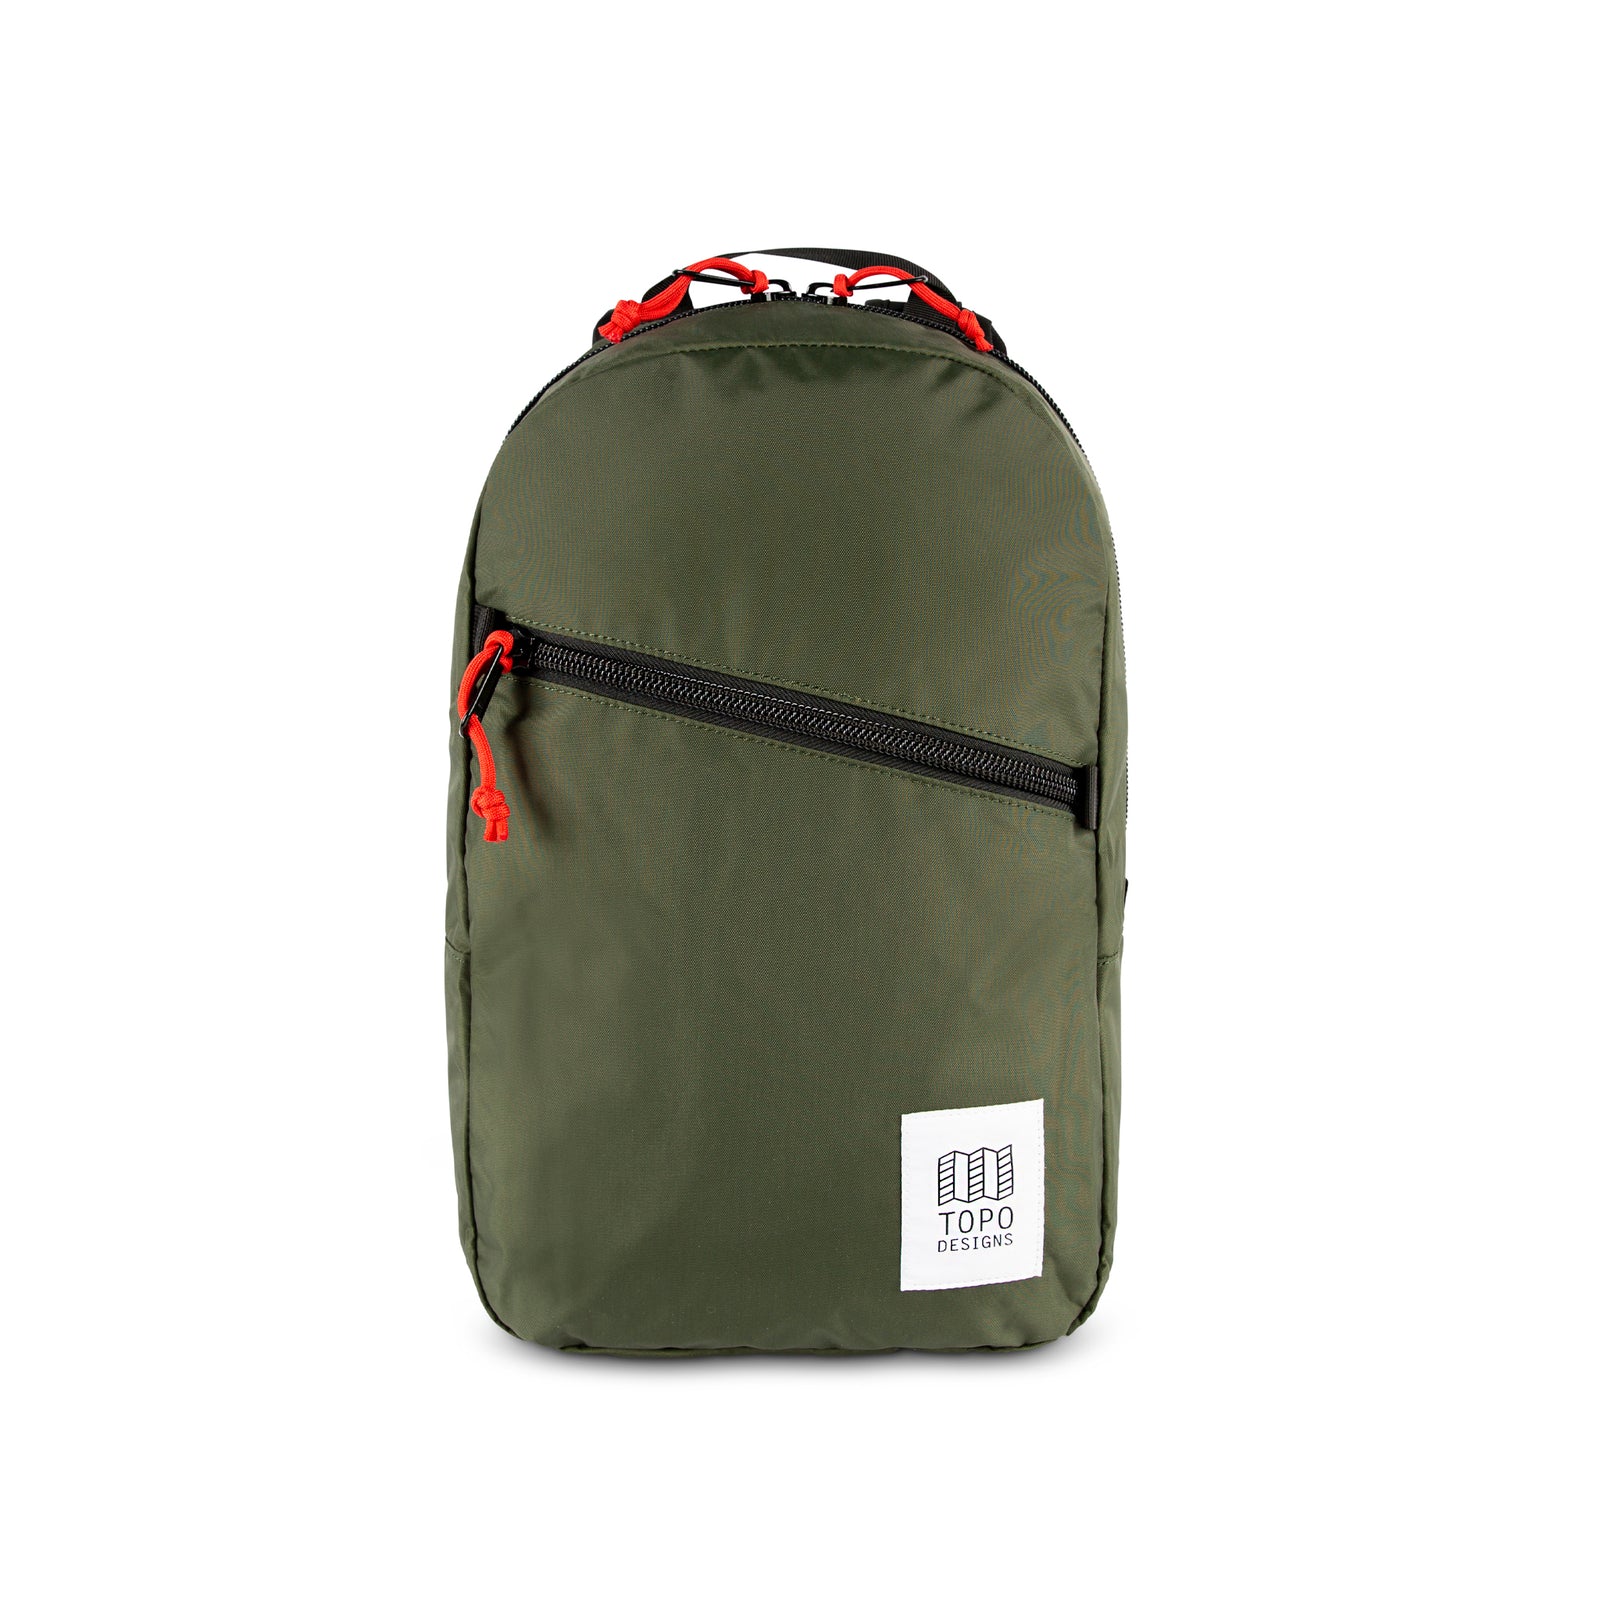 Topo Designs Light Pack laptop backpack in "Olive".